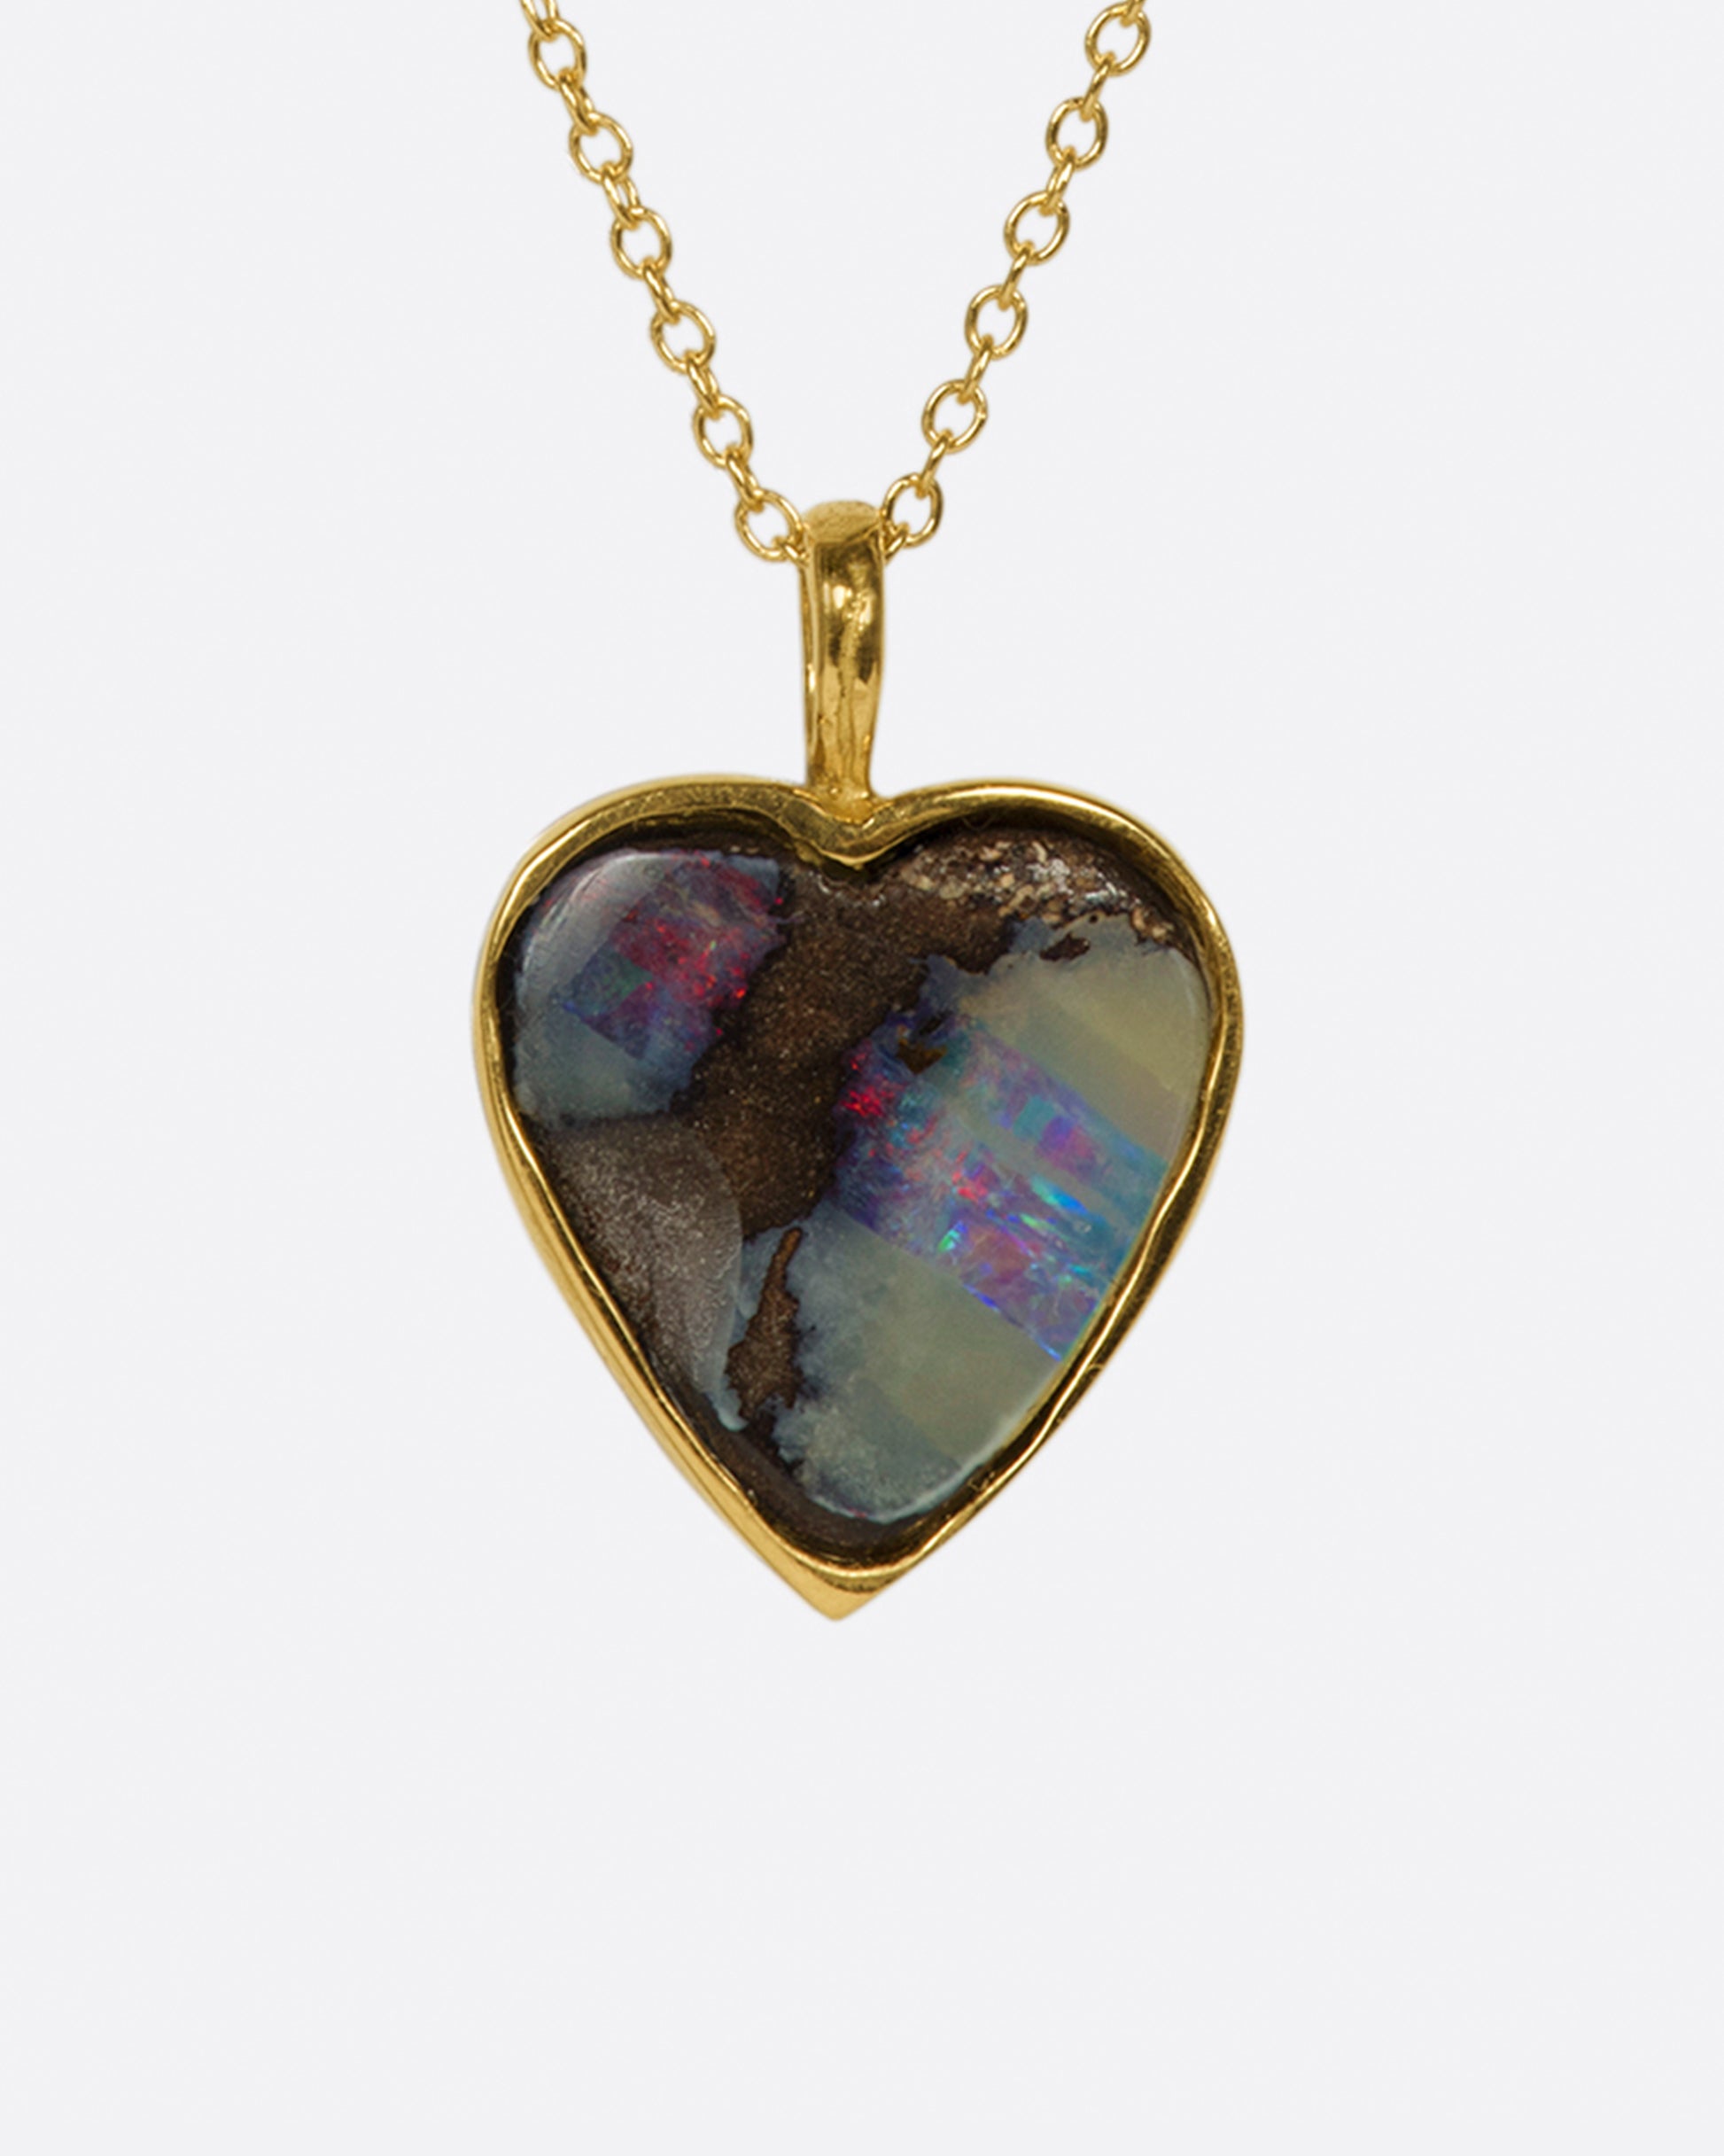 A heart shaped Australian opal pendant with loads of flash.